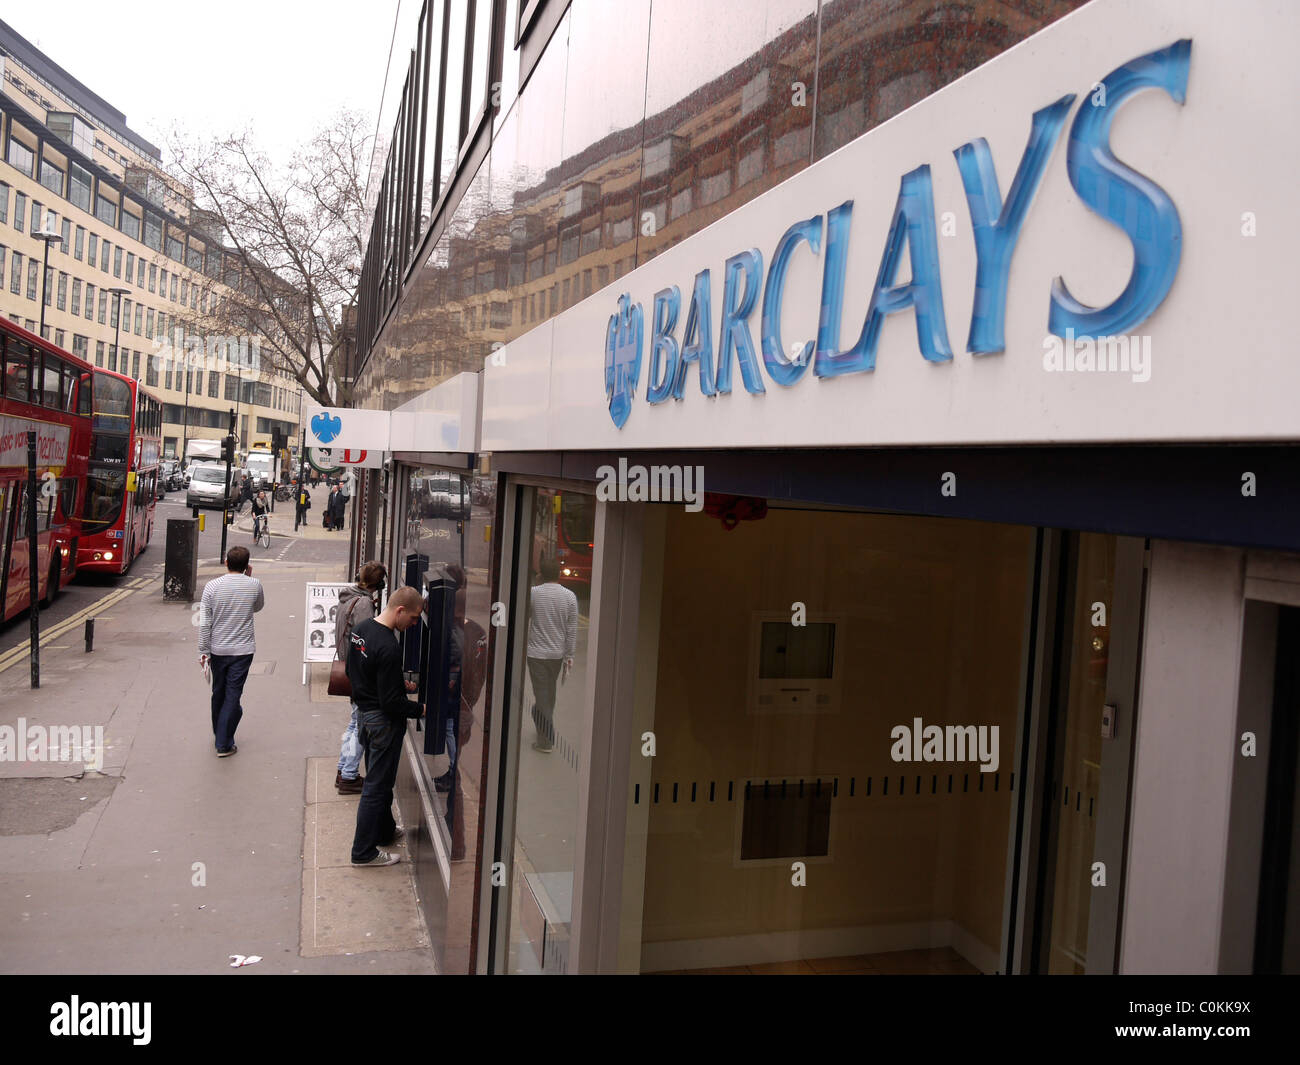 Barclays bank uk high street bank Stock Photo